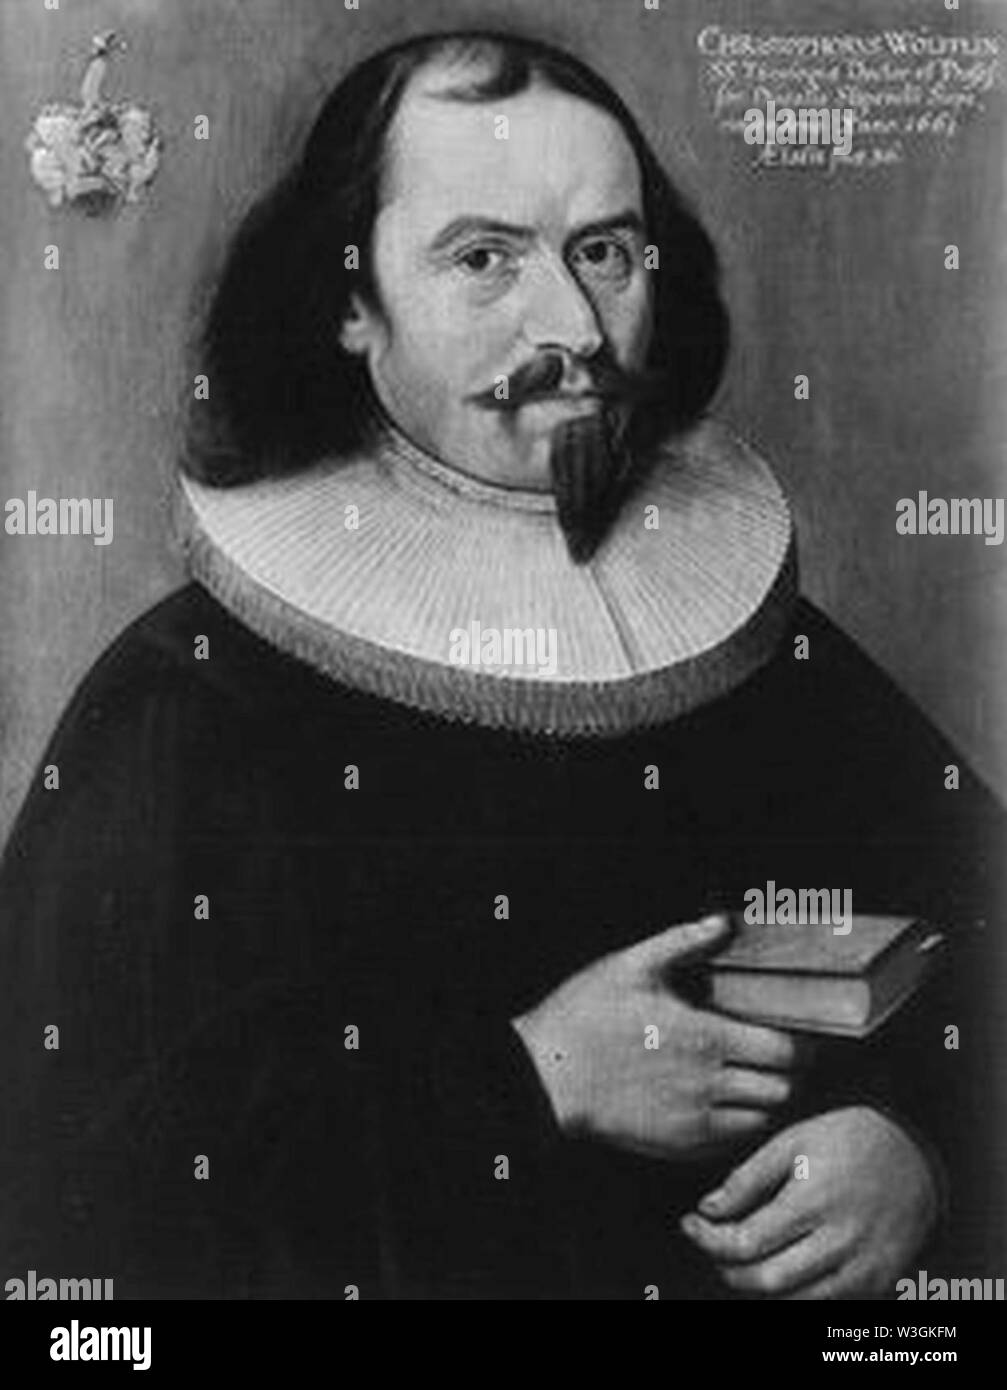 Christoph Wölfflin (1625-1688). Banque D'Images